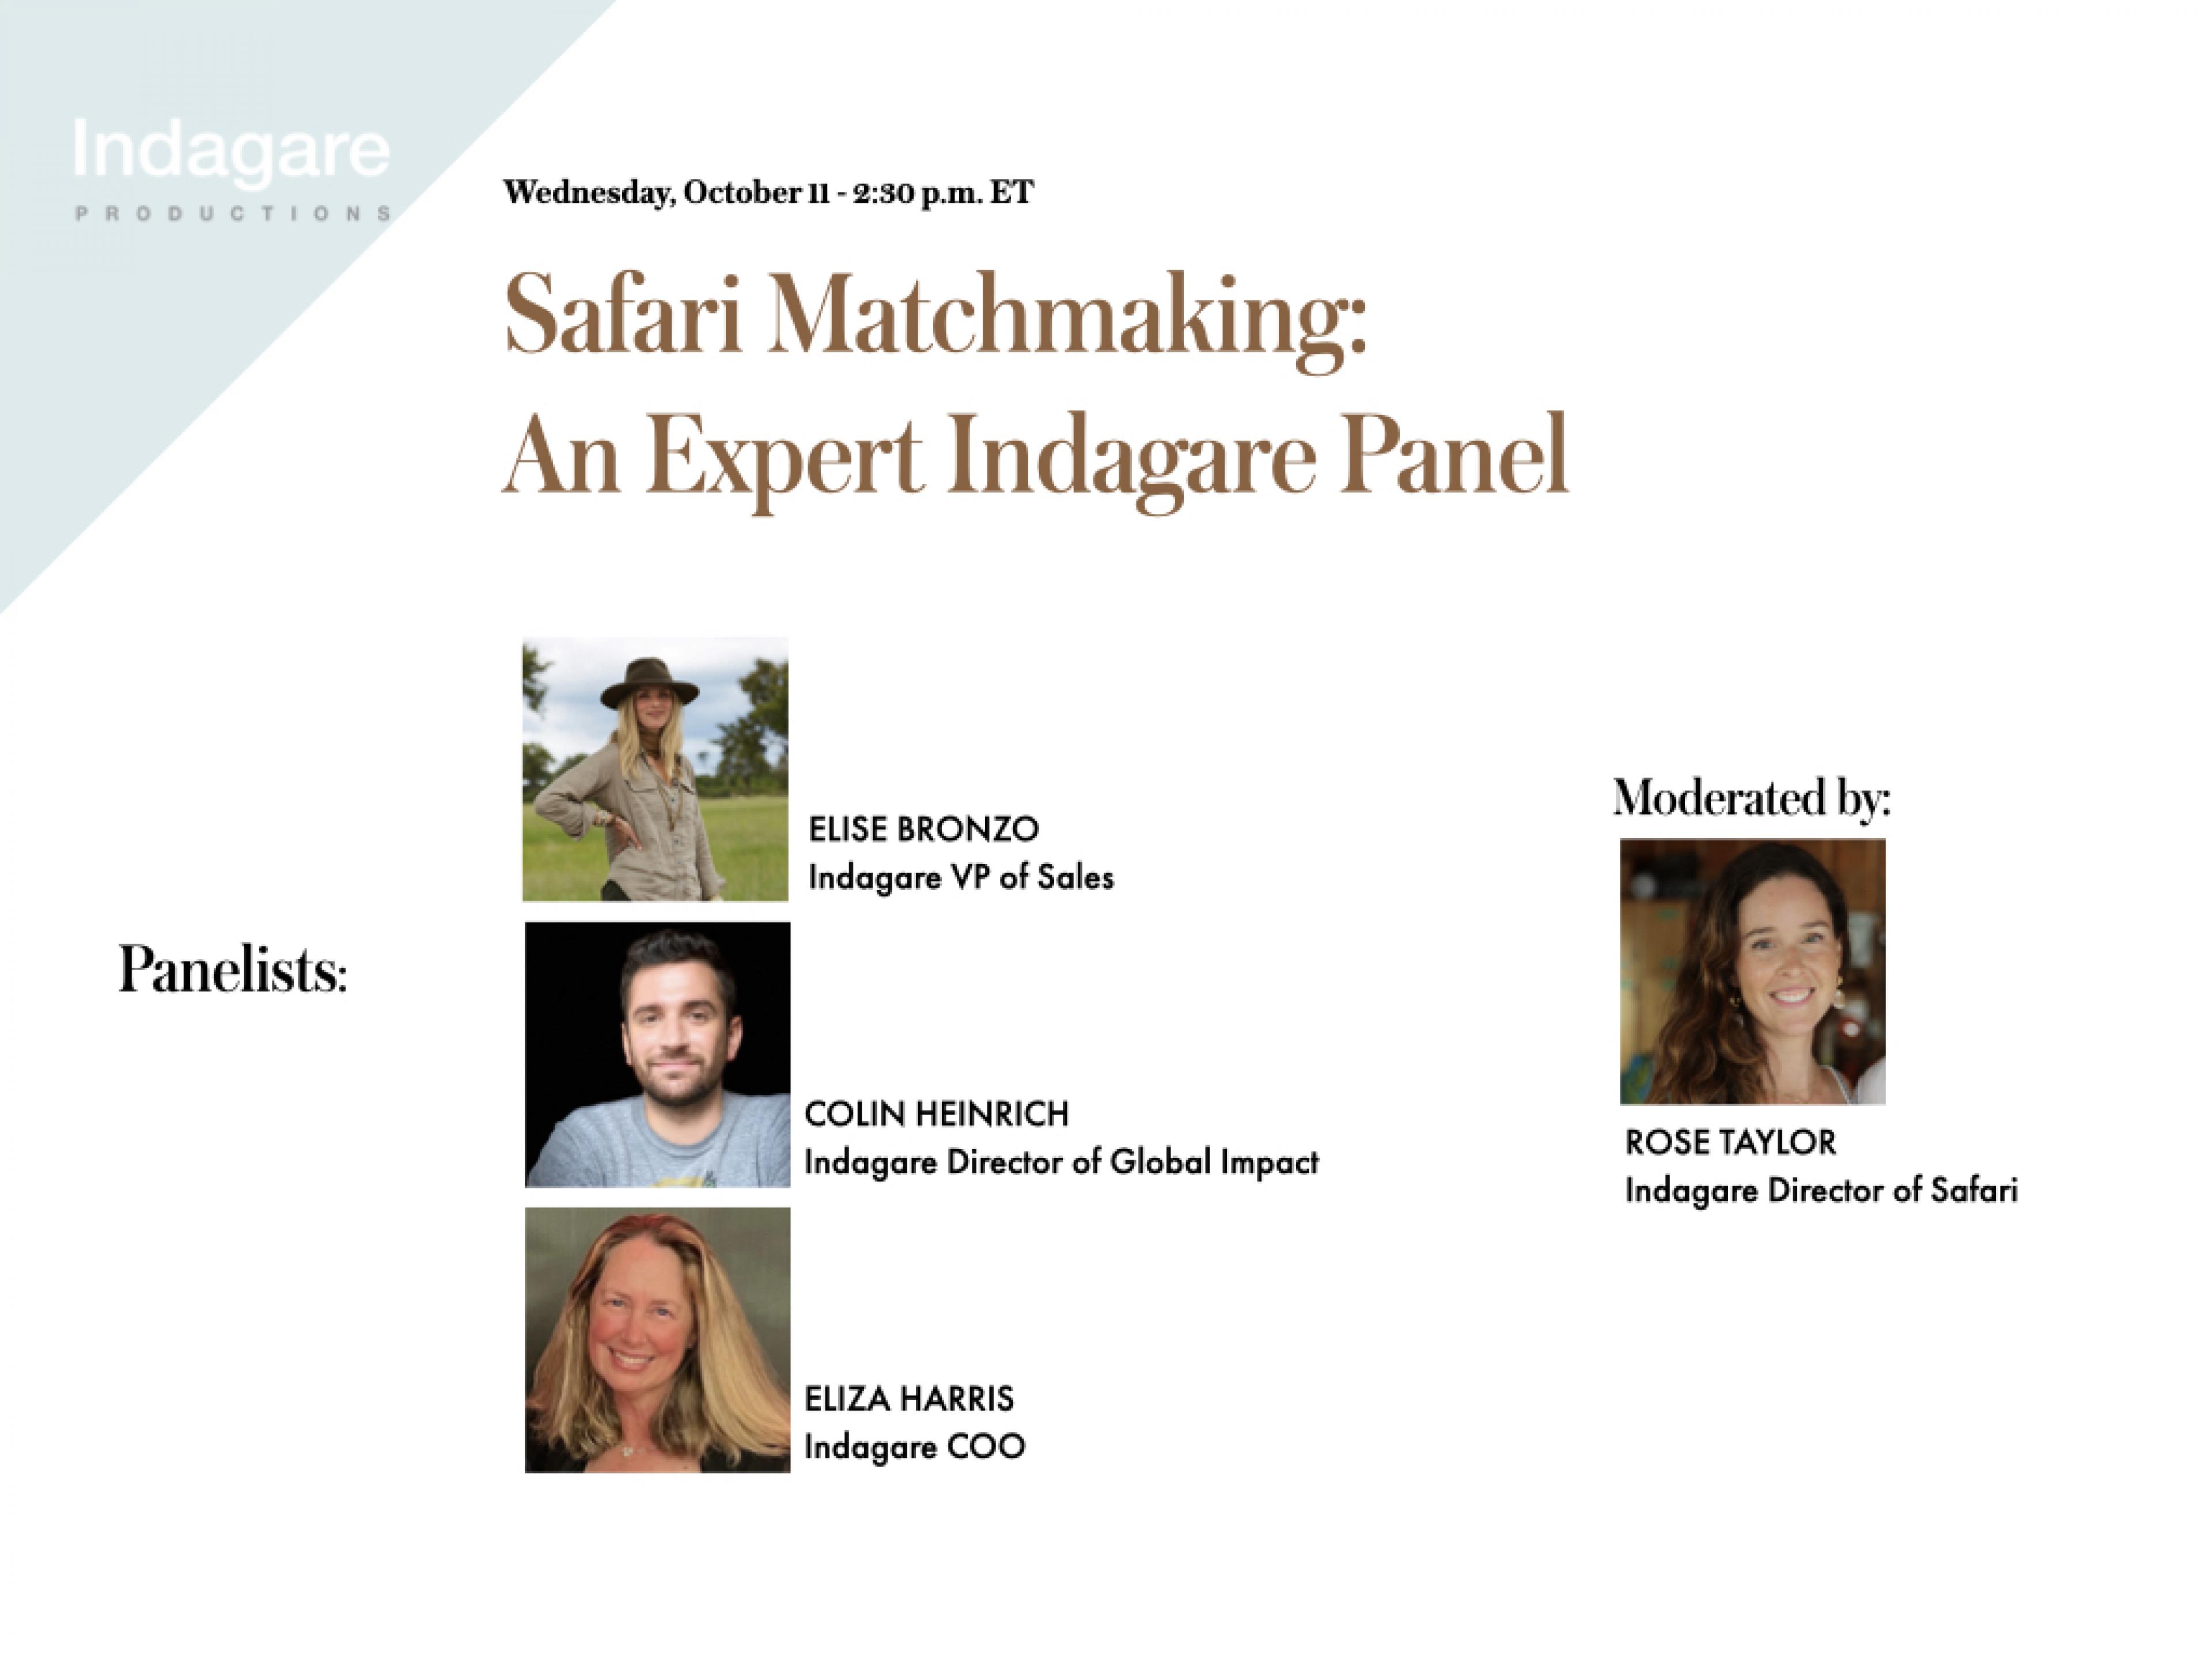 Photos of panelists on the Safari Matchmaker Expert Panel